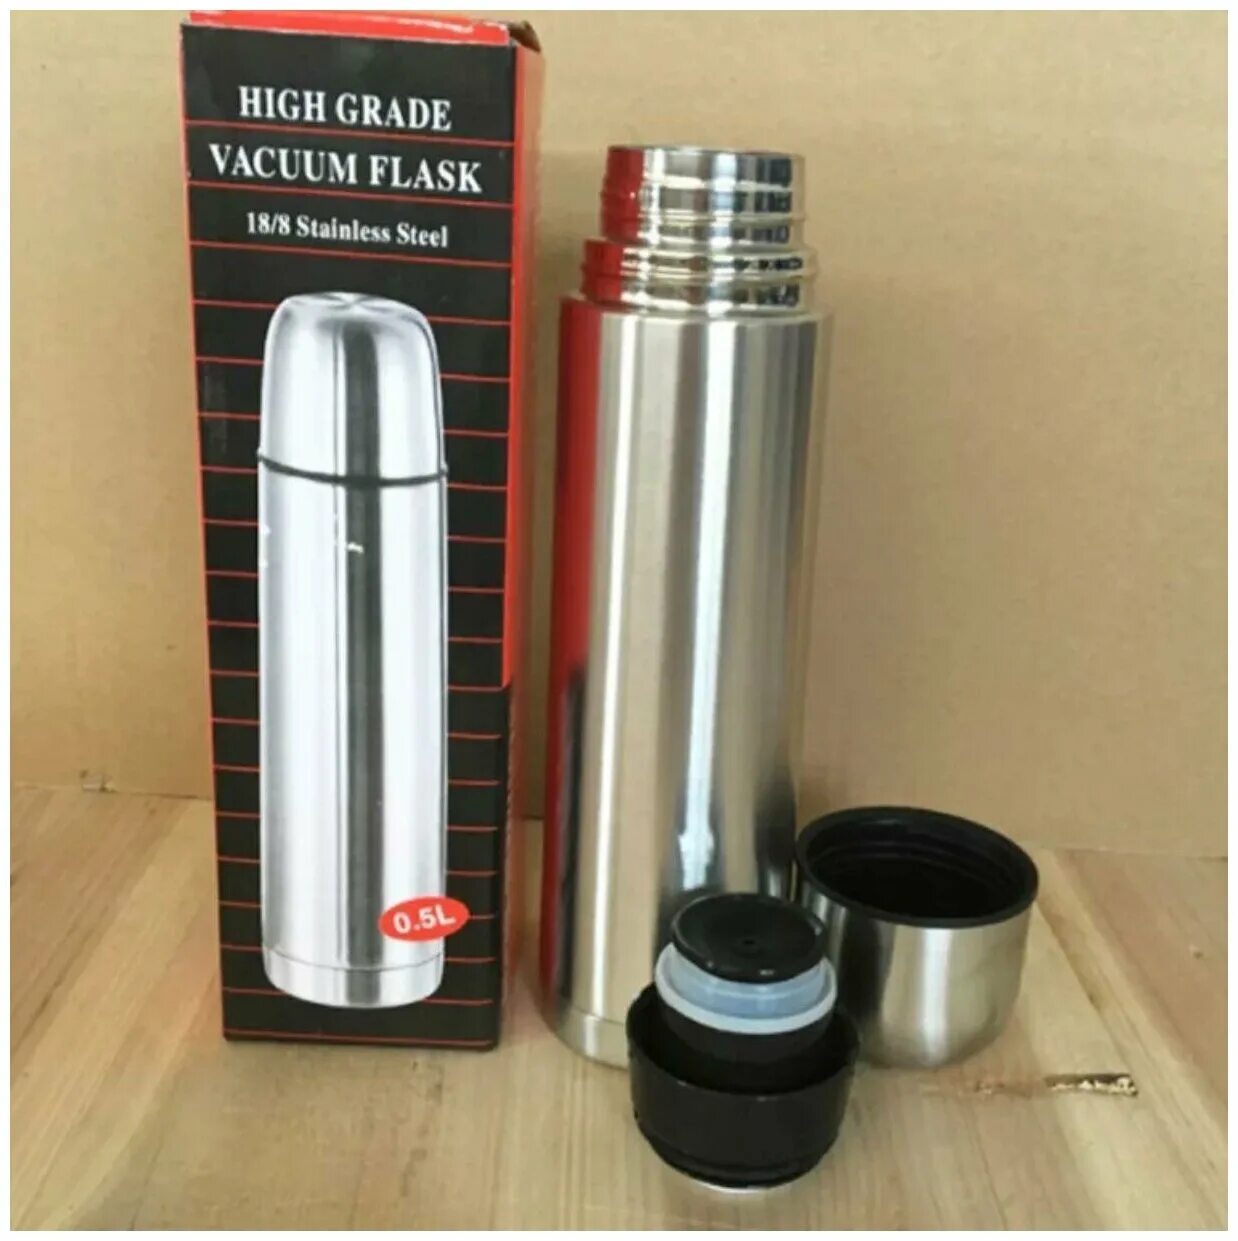 Термос 0 5л. Термос High Grade Vacuum Flask 18/8 Stainless Steel. Термос Vinzer Vacuum Flask 18-10 Stainless Steel термос. Термос High Grade Vacuum Flask 0.75. Vacuum Flask термос 0.5.